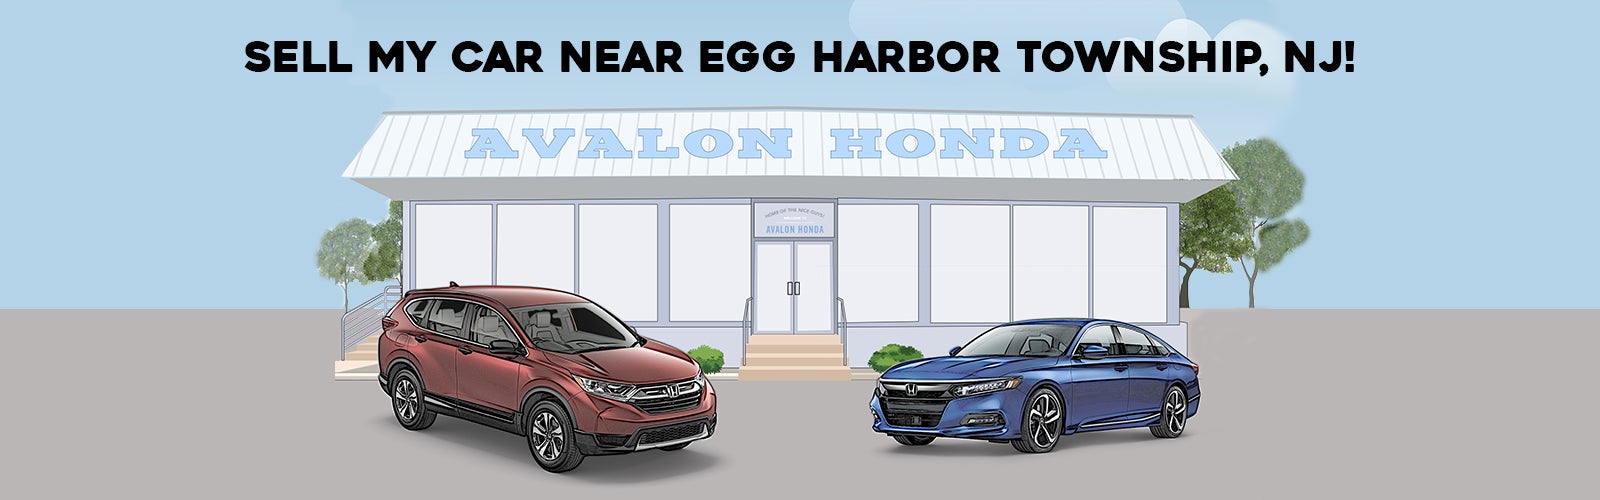 Sell my car in Egg Harbor Township, NJ